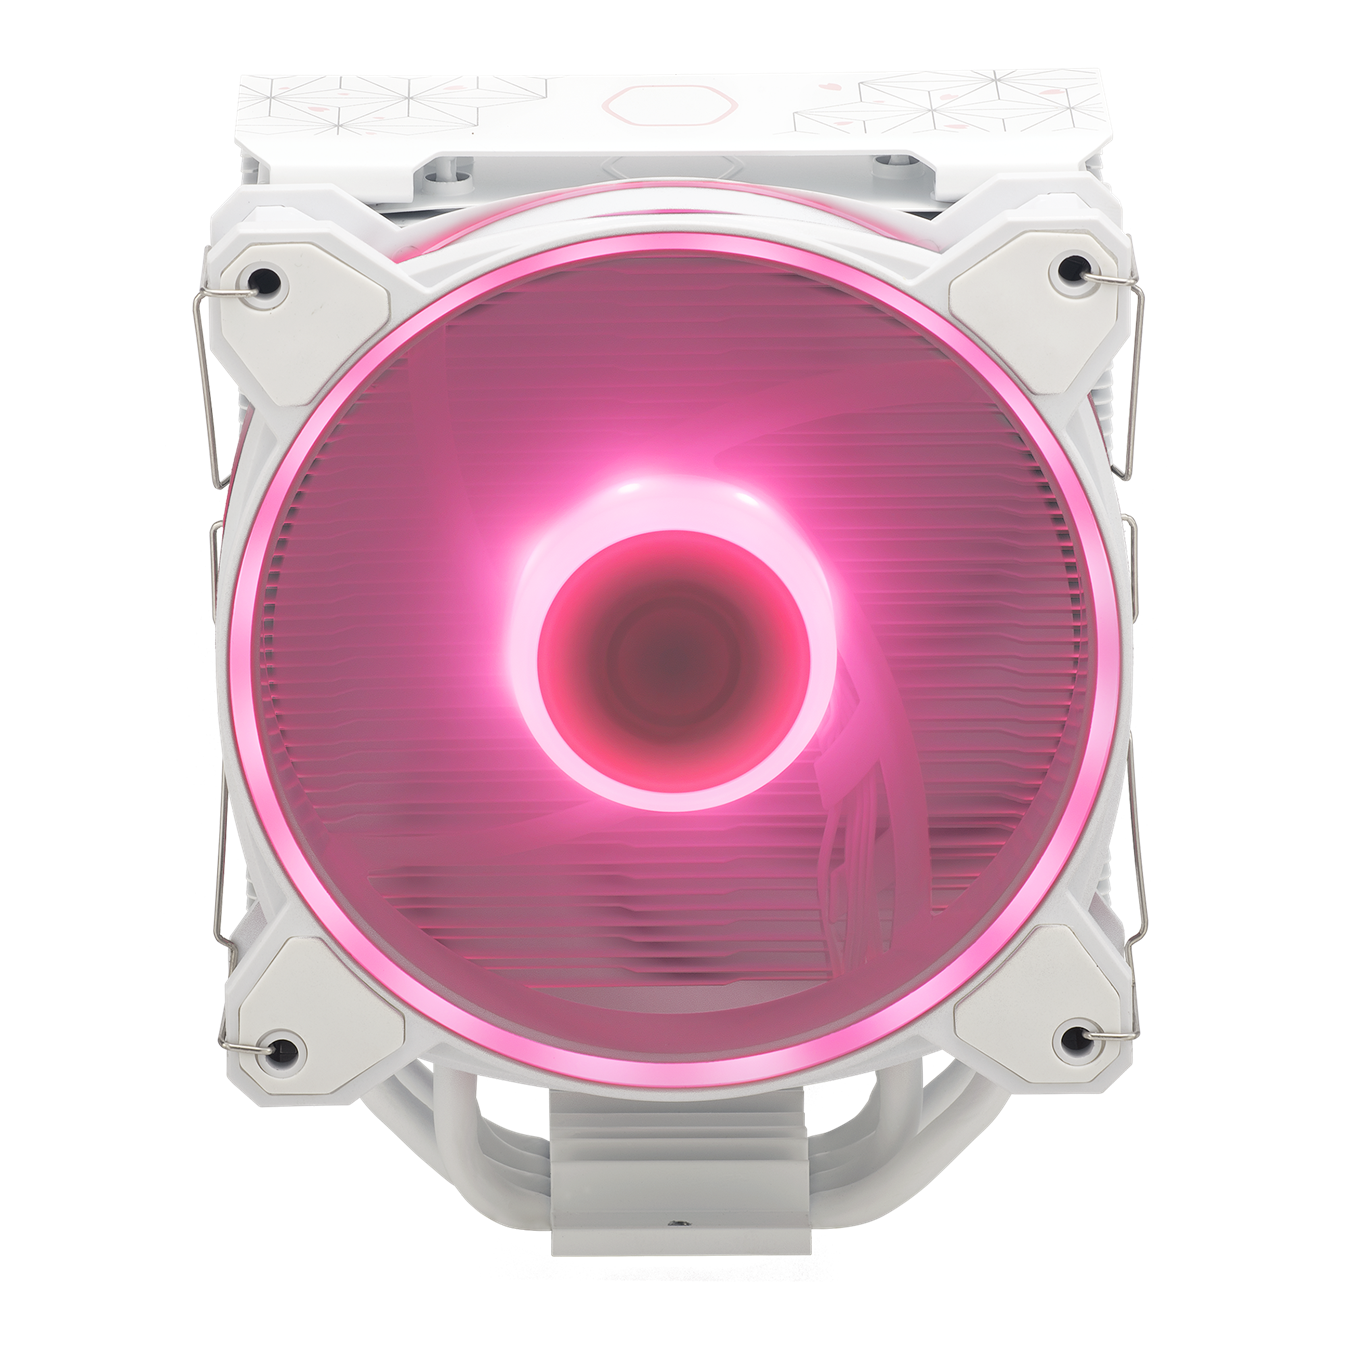 Hyper 212 Halo White Sakura Limited Edition - ARGB Lighting Photo 3